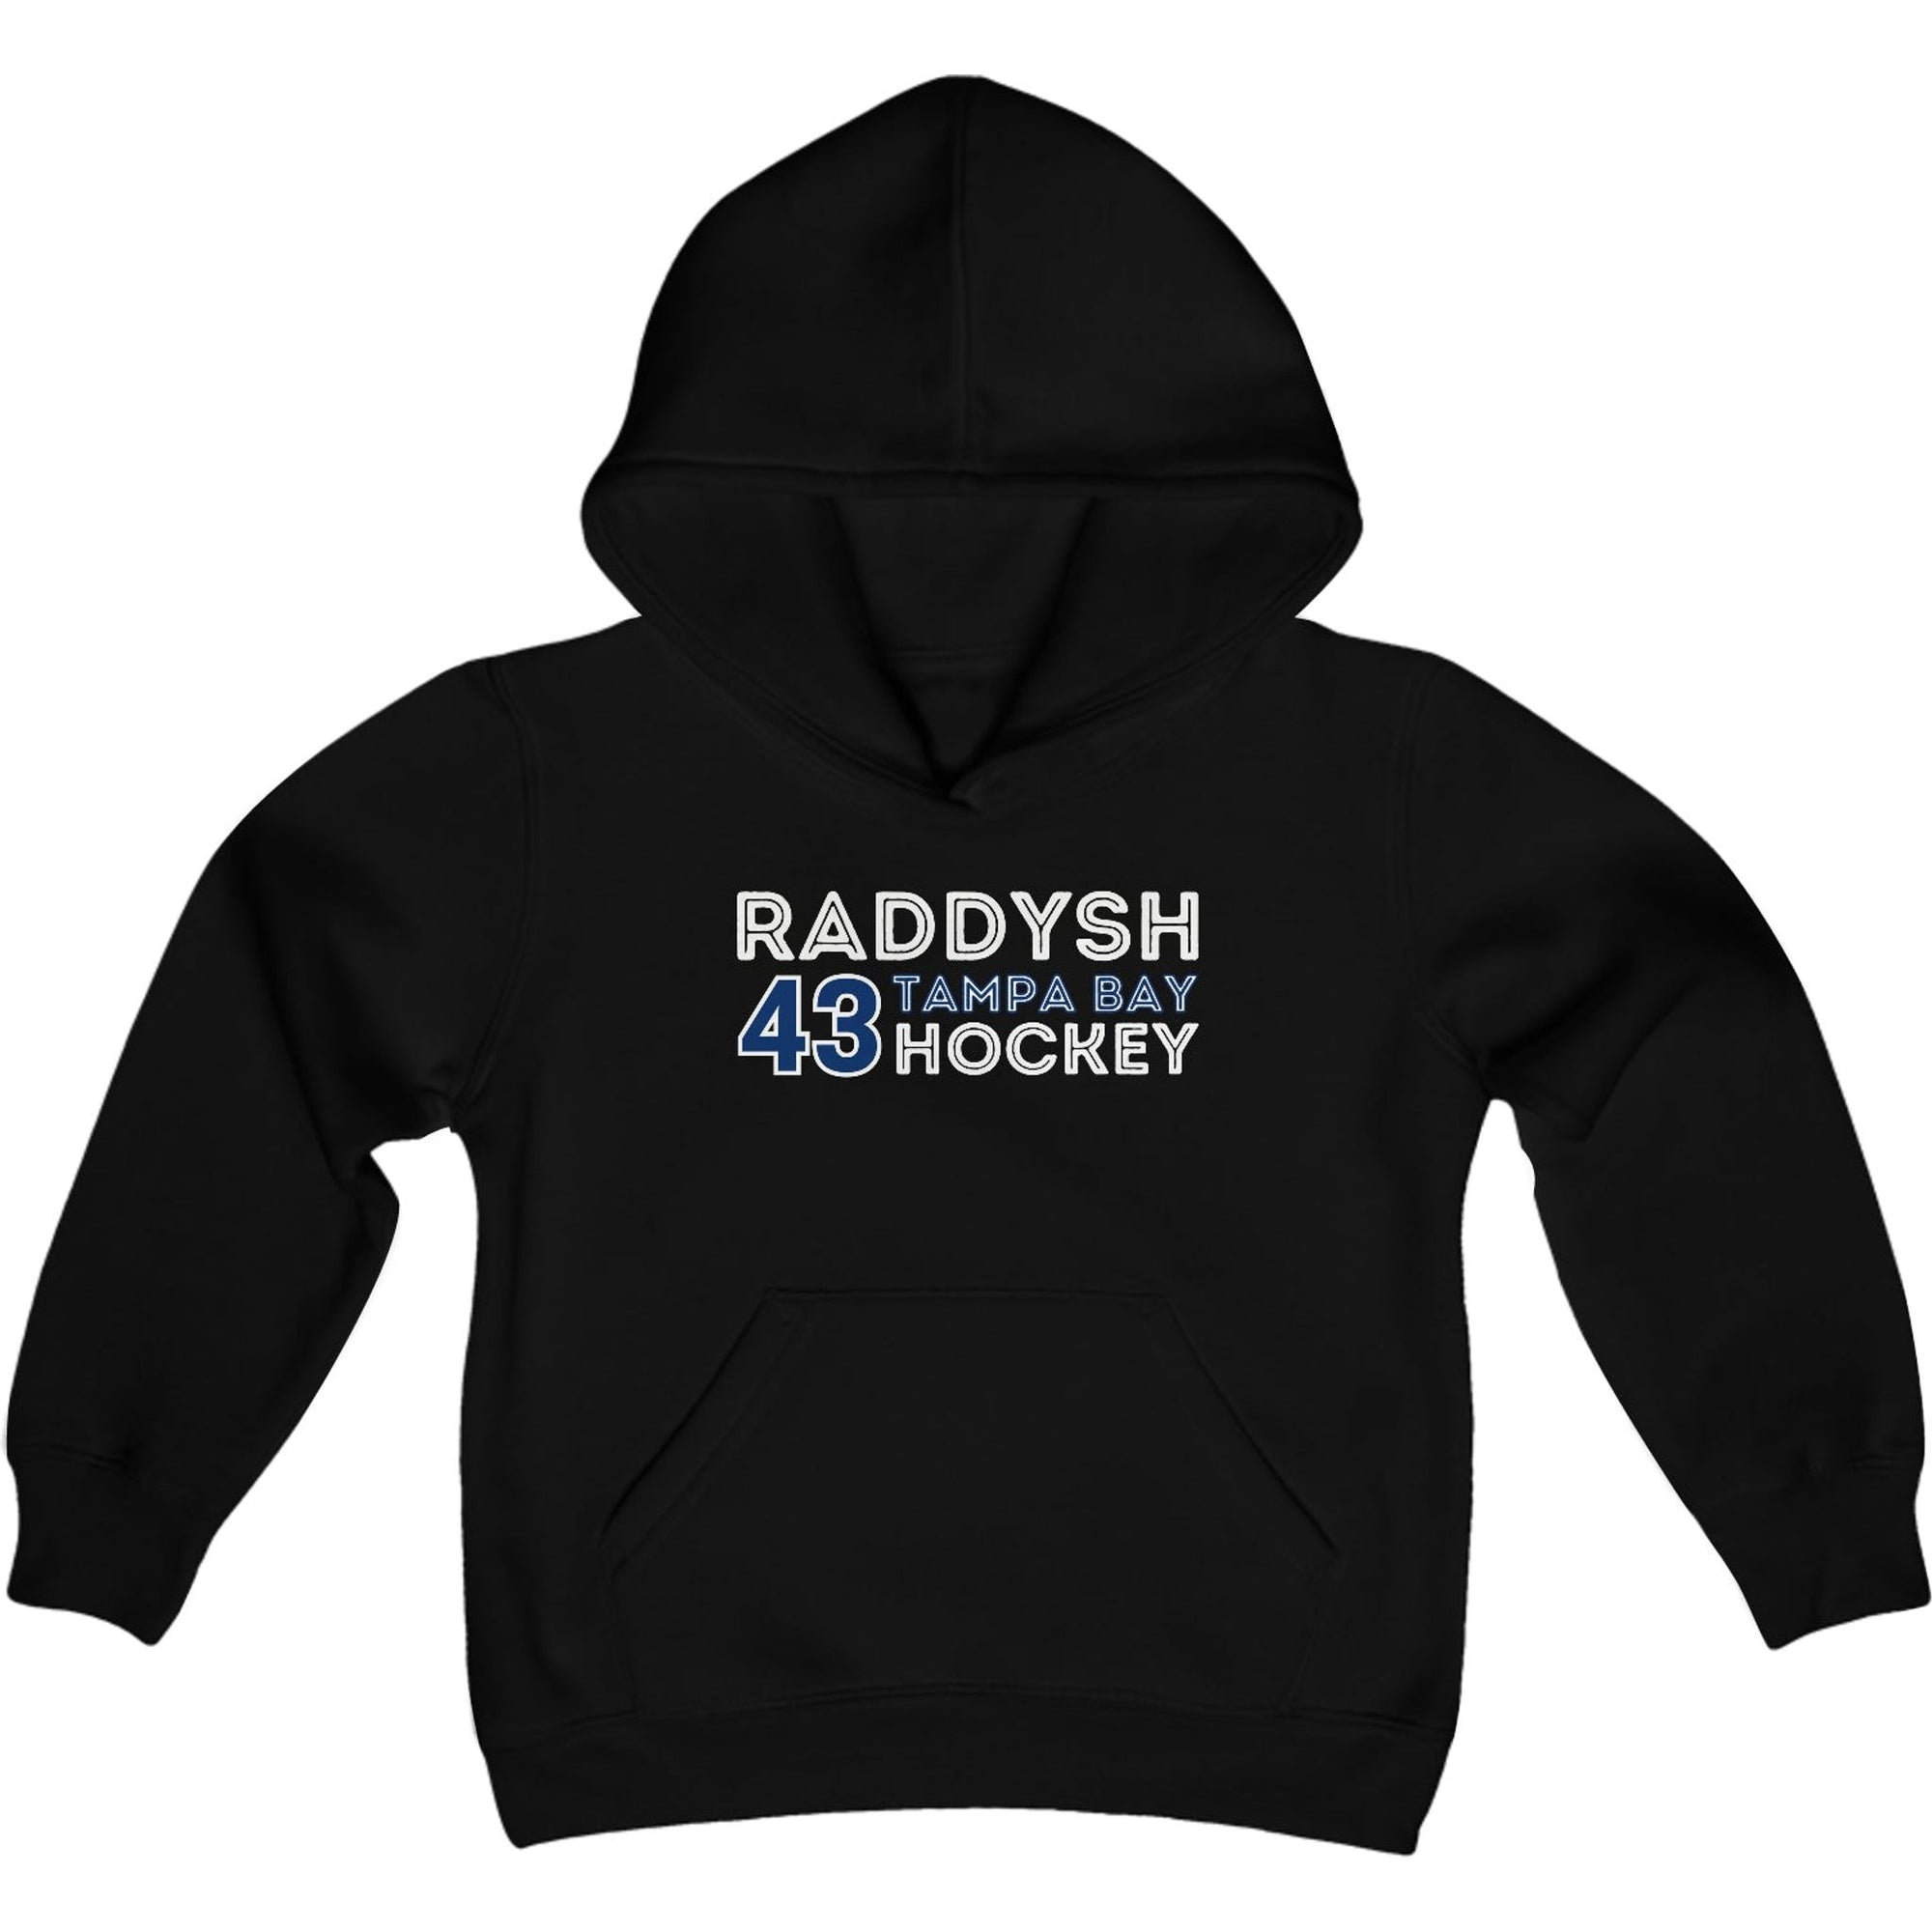 Raddysh 43 Tampa Bay Hockey Grafitti Wall Design Youth Hooded Sweatshirt